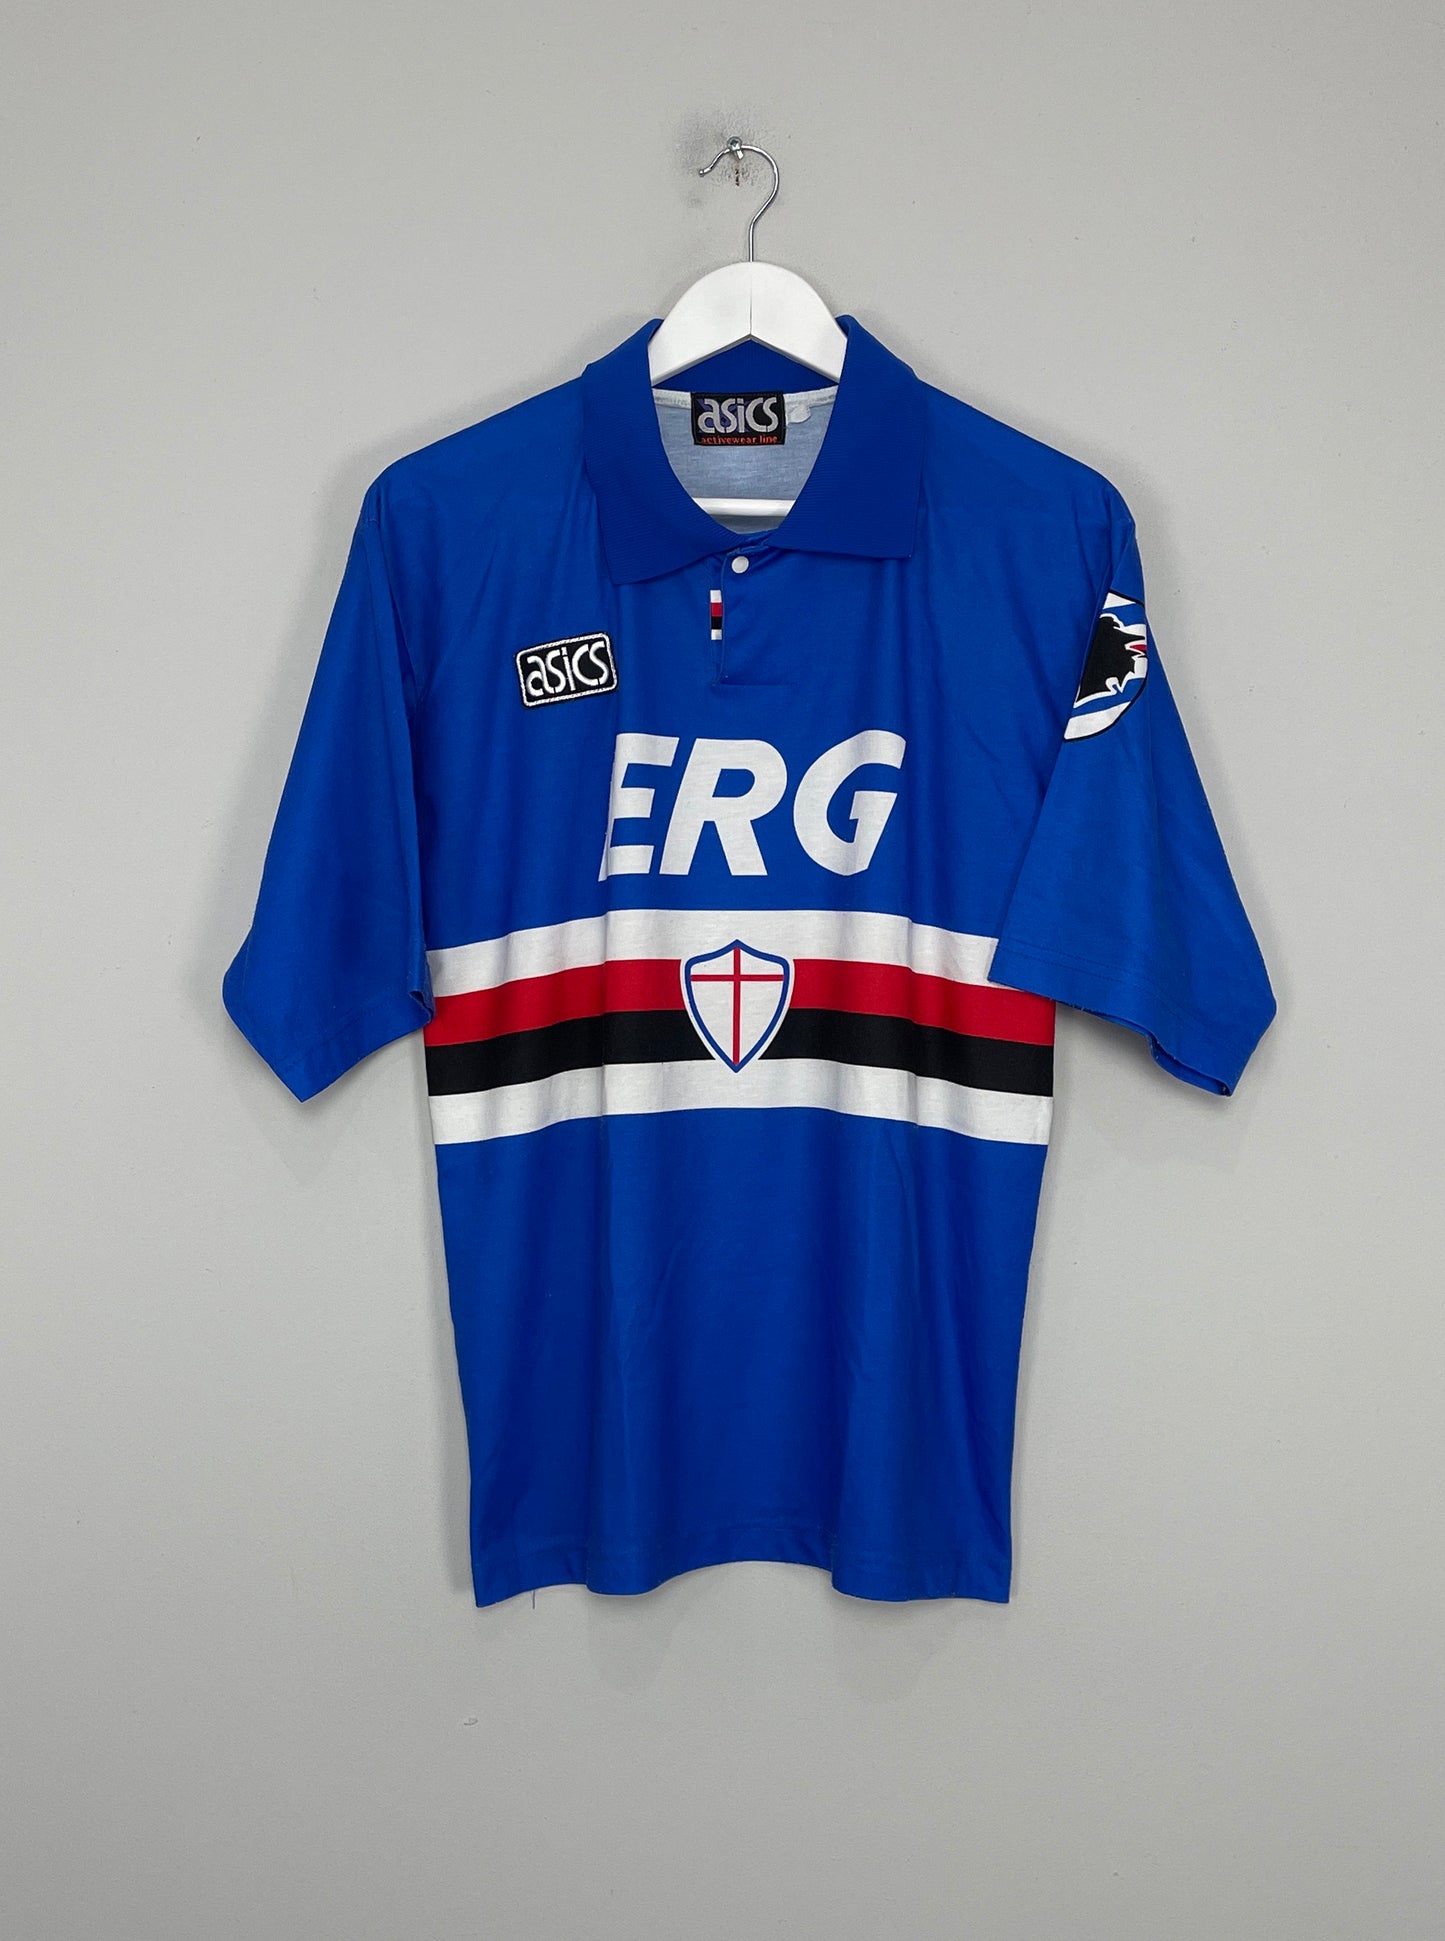 Image of the Sampdoria shirt from the 1992/94 season